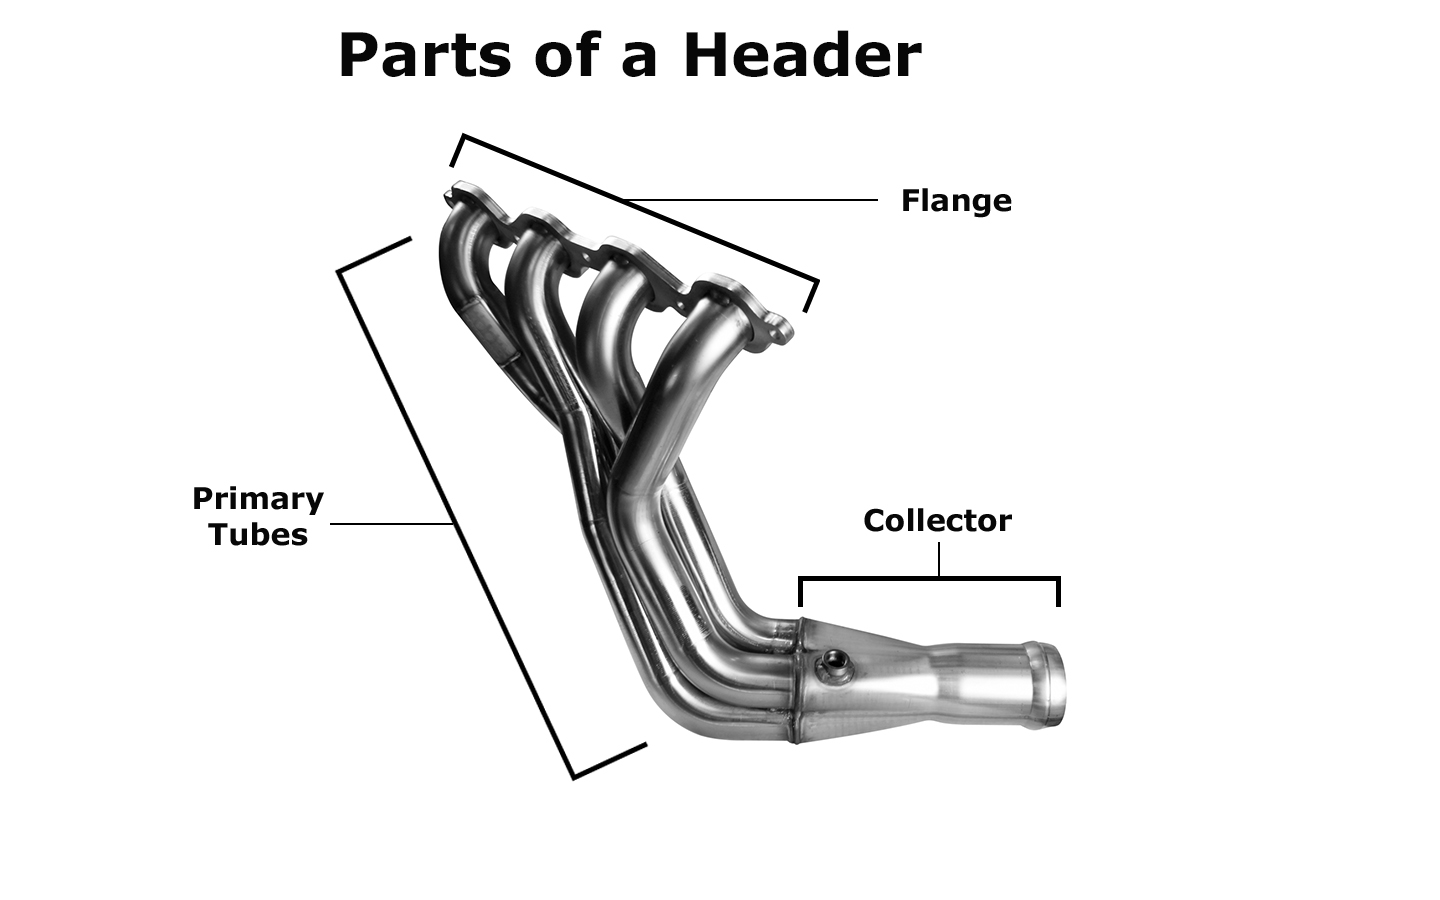 Parts of a Header